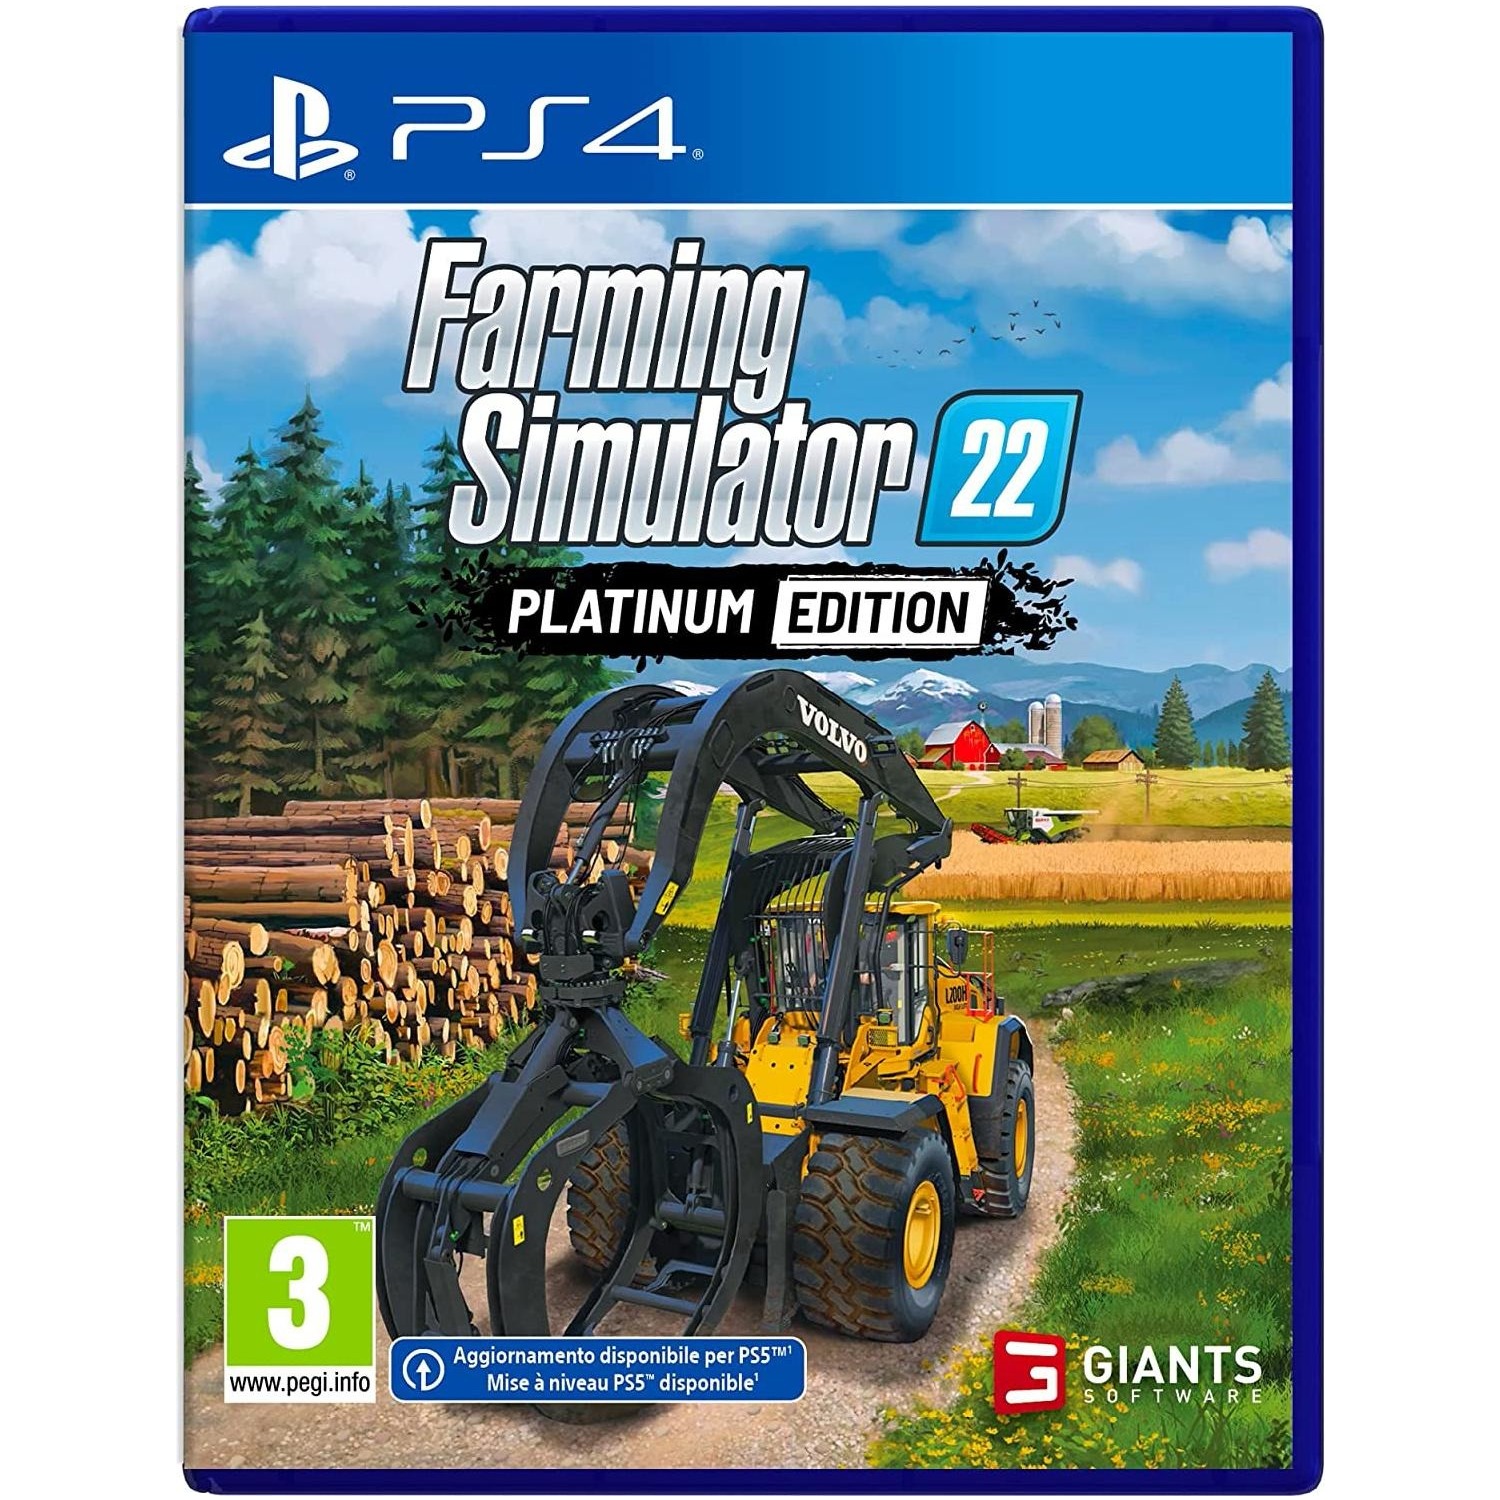 Gioco PS4 Farming Simulator 22 Platinum Edition - DIMOStore